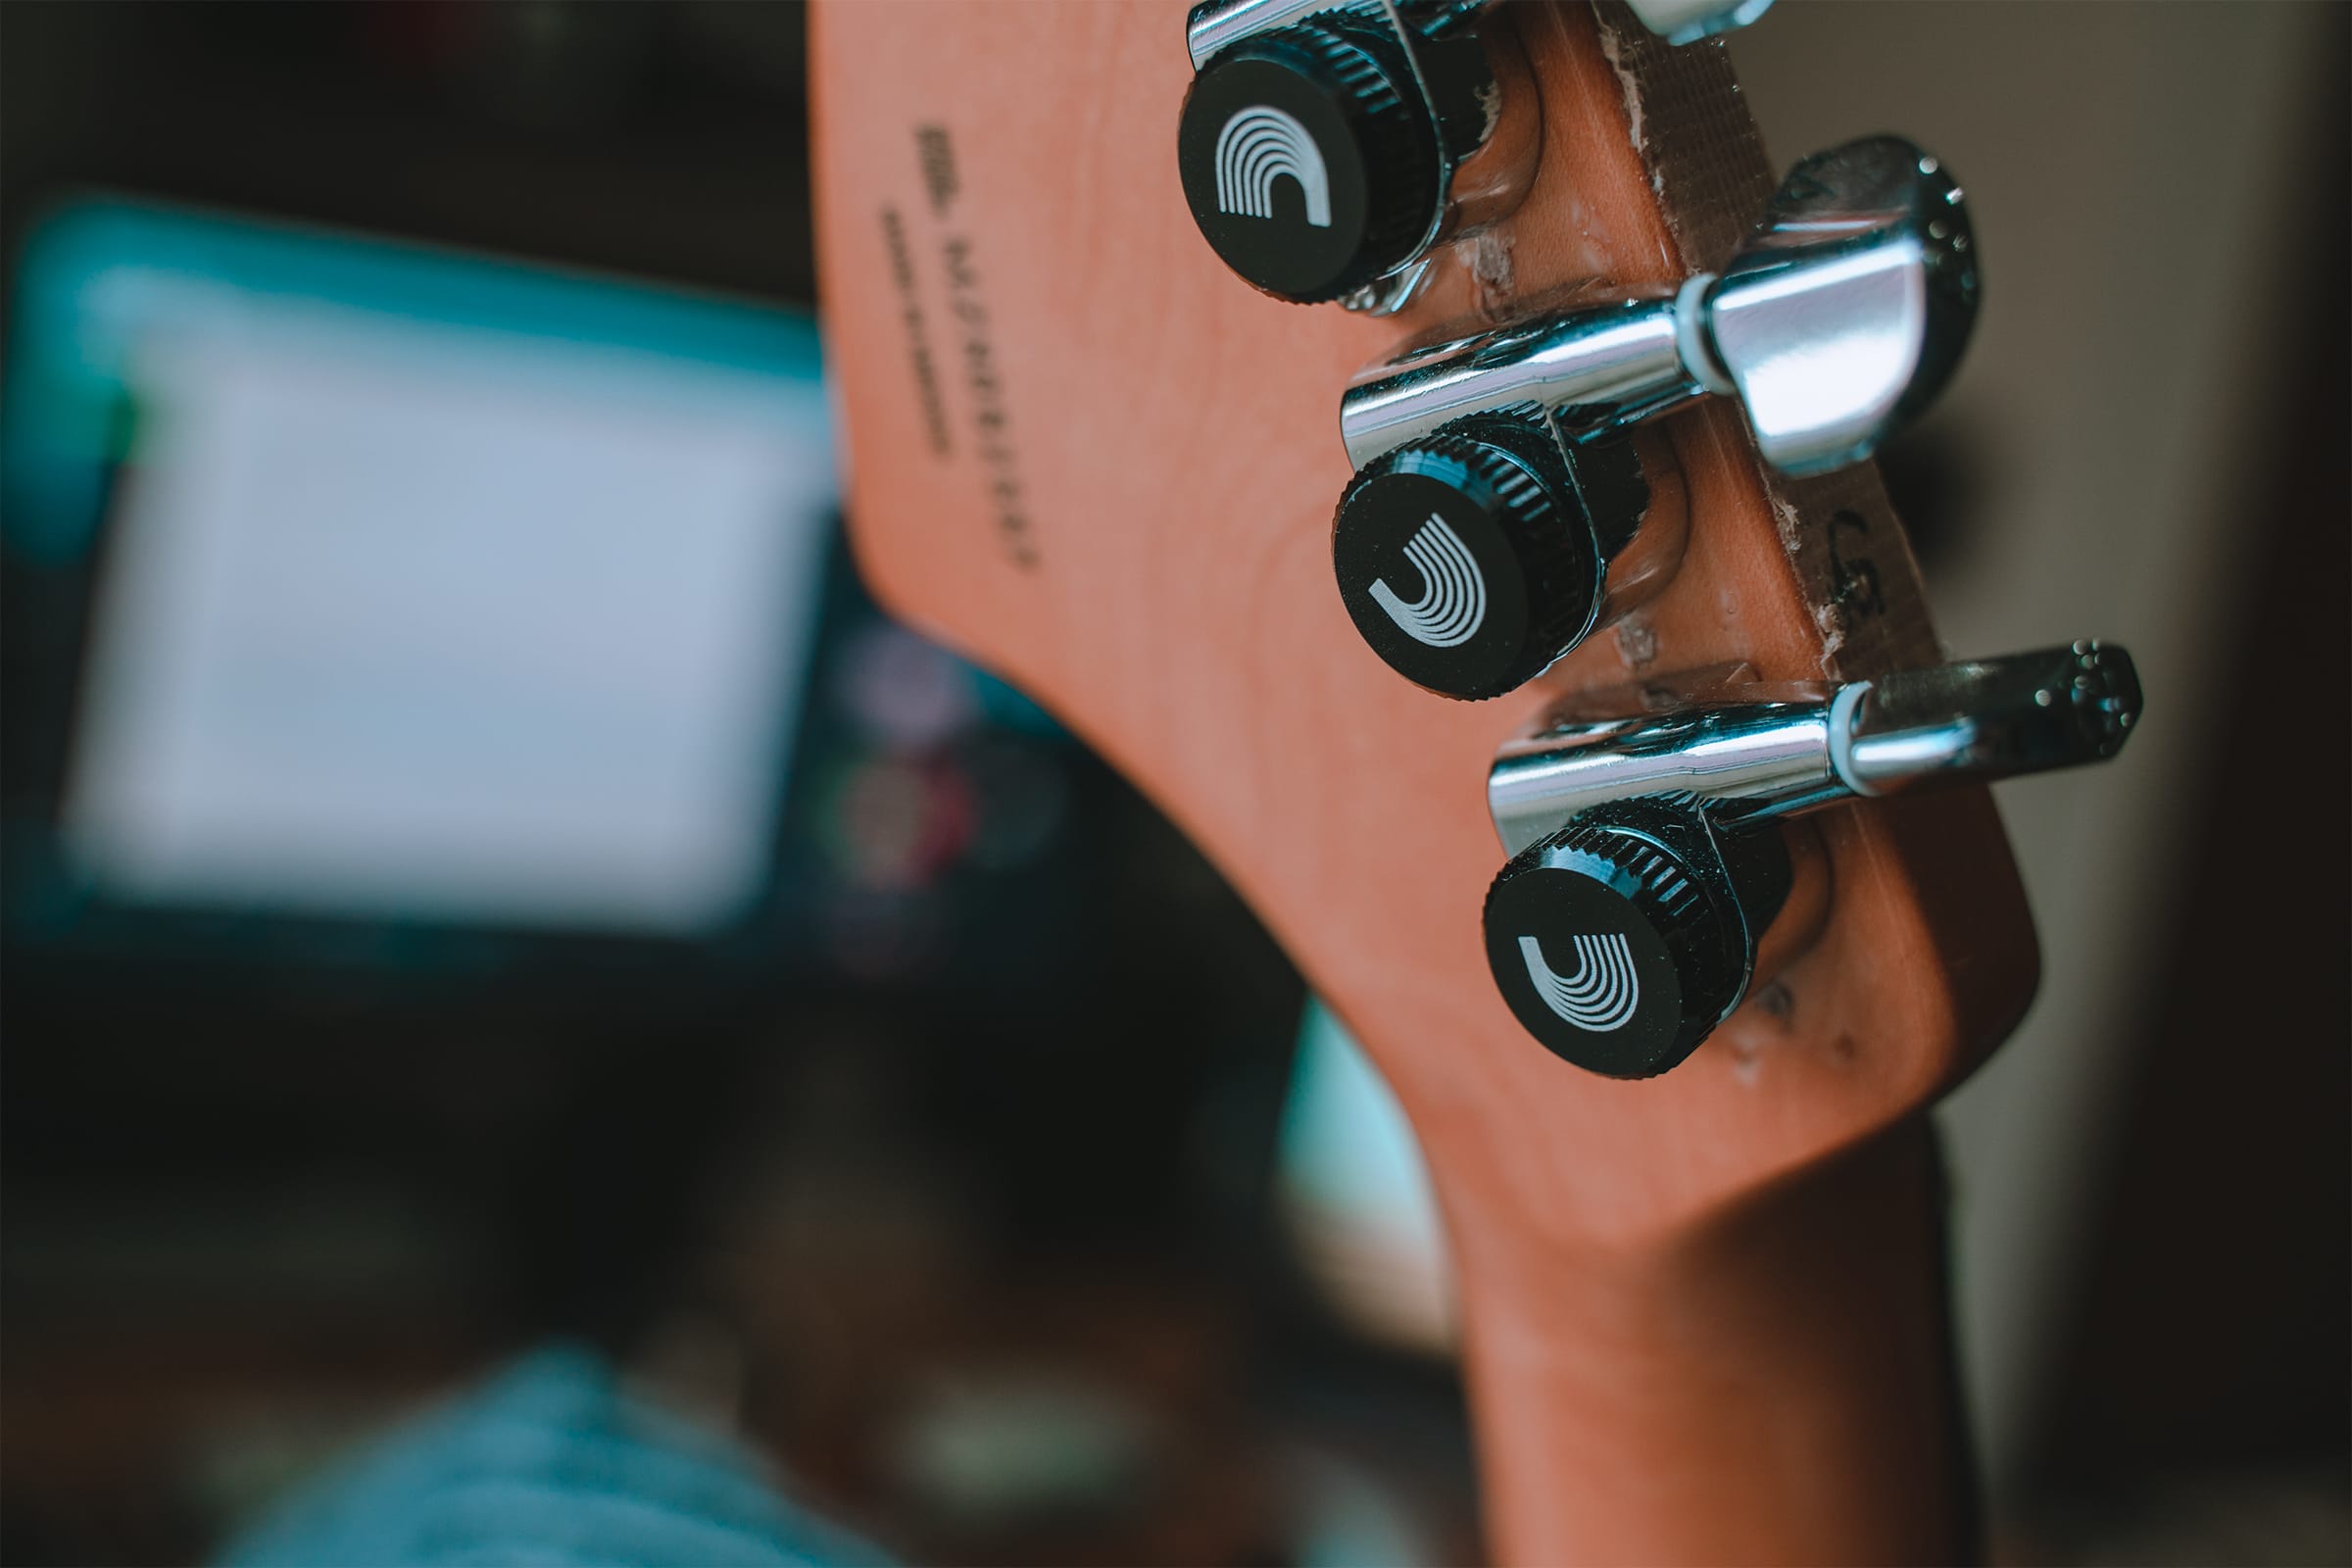 AUTO TRIM ペグを装着したギターのヘッド部分の裏の写真